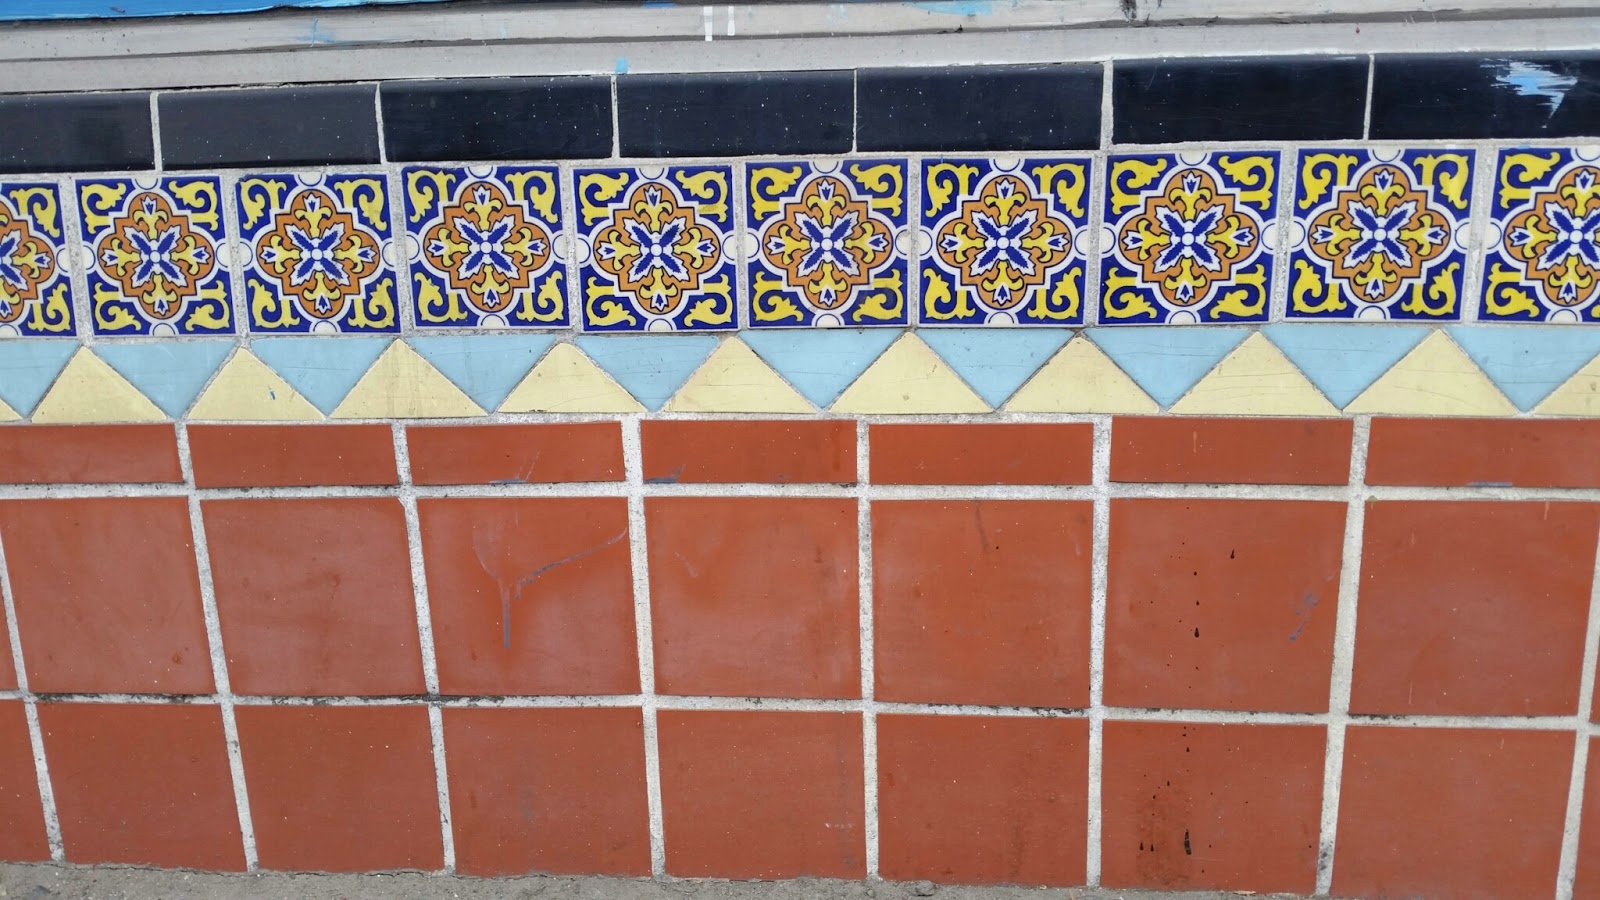 Spanish and Moorish designs influence the border patterns.